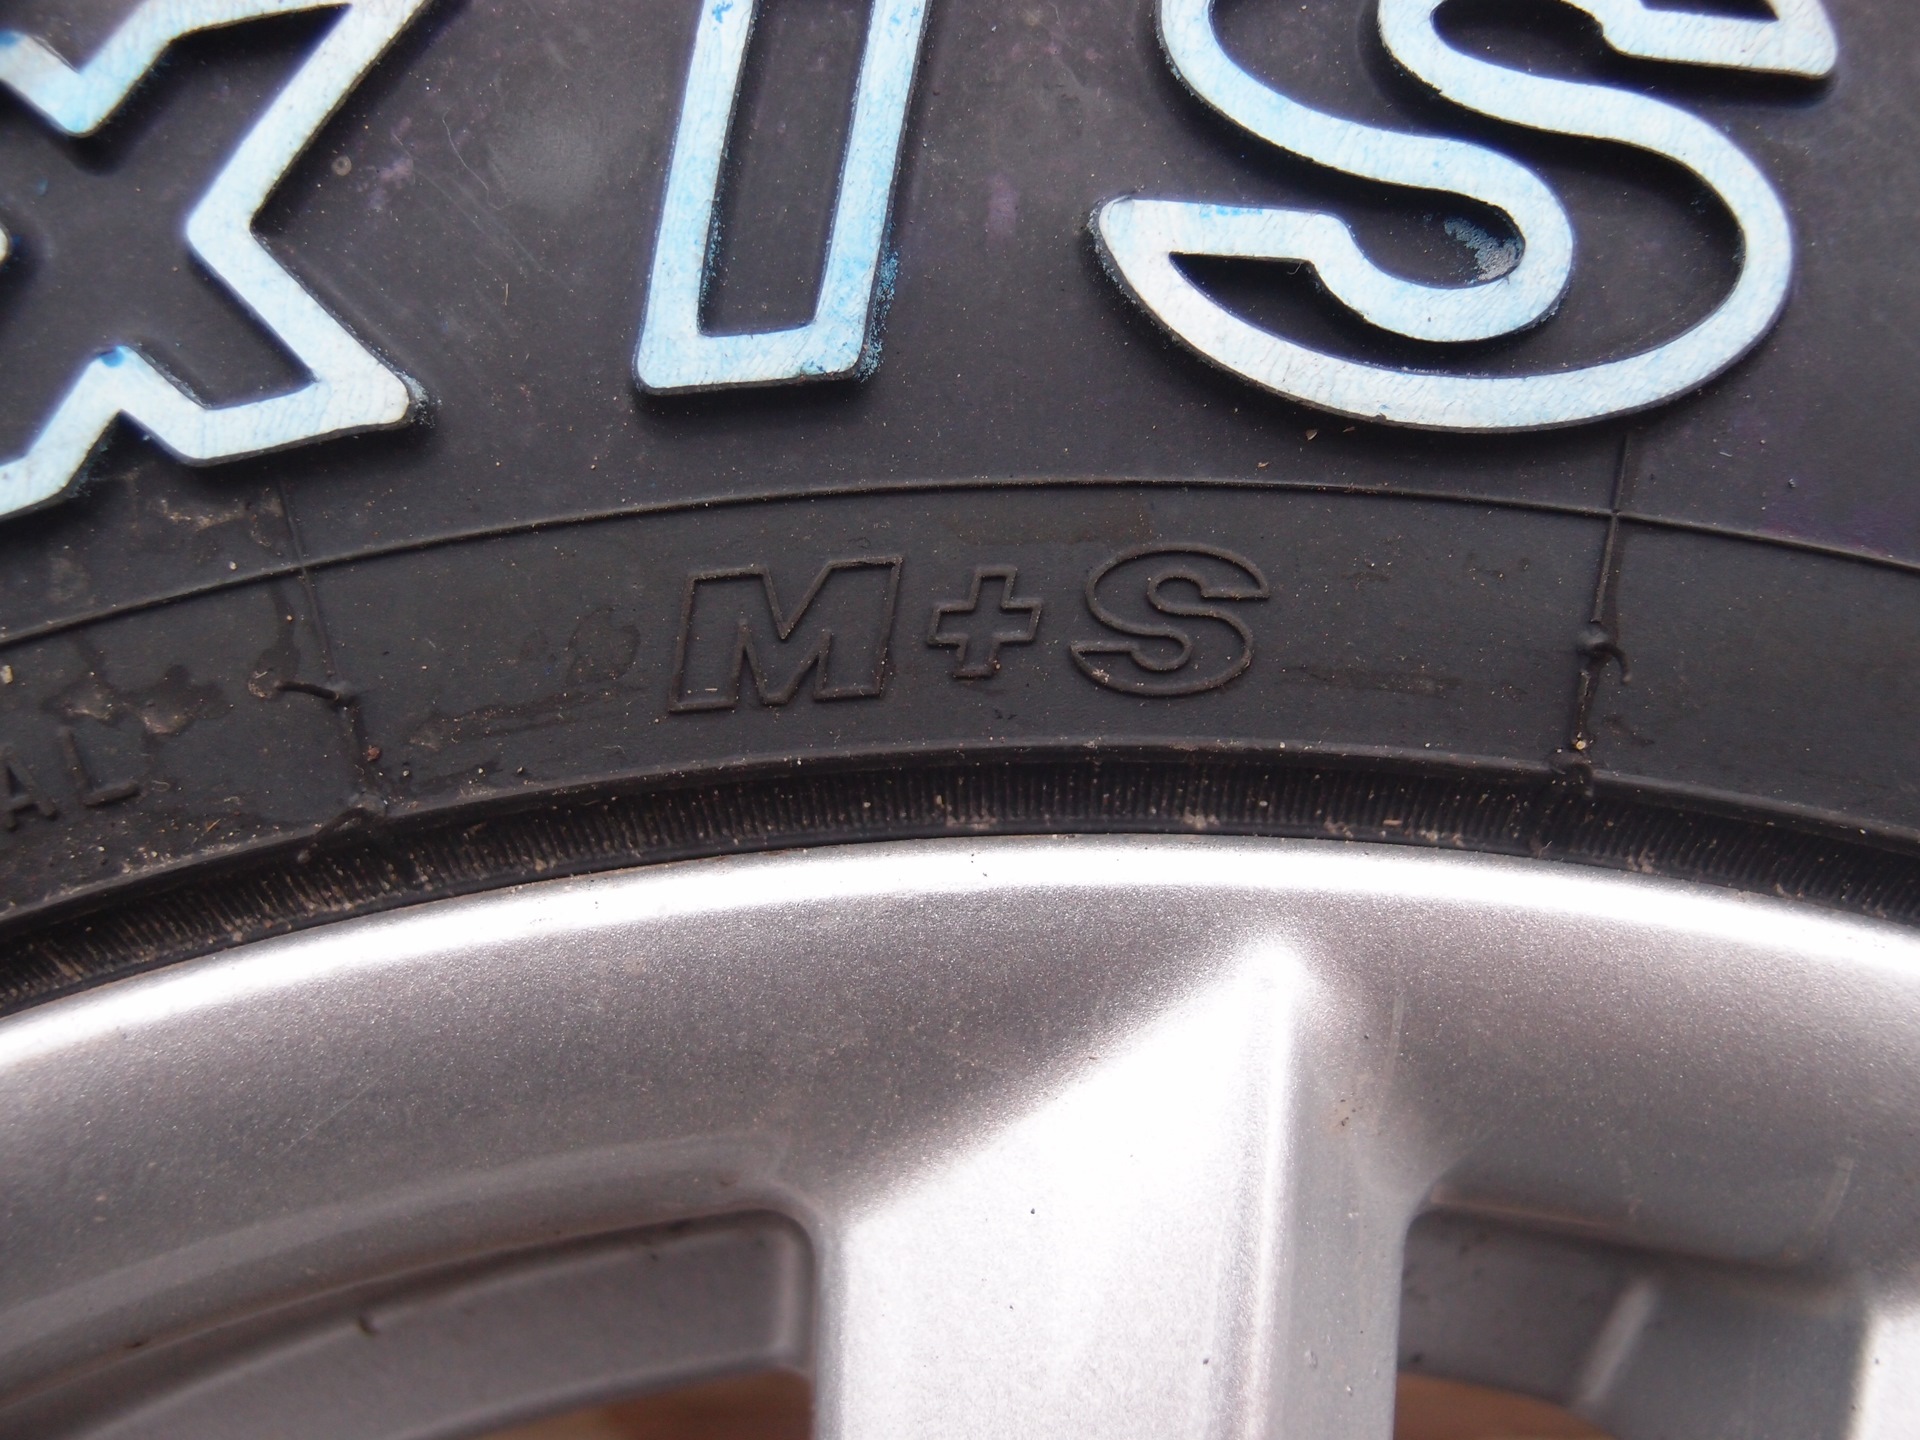 Где на шинах год выпуска фото. Maxxis год резины r12. Maxxis Bravo at-771 маркировка. Дата выпуска шин Maxxis. Максис АТ 771 год маркировка резины.